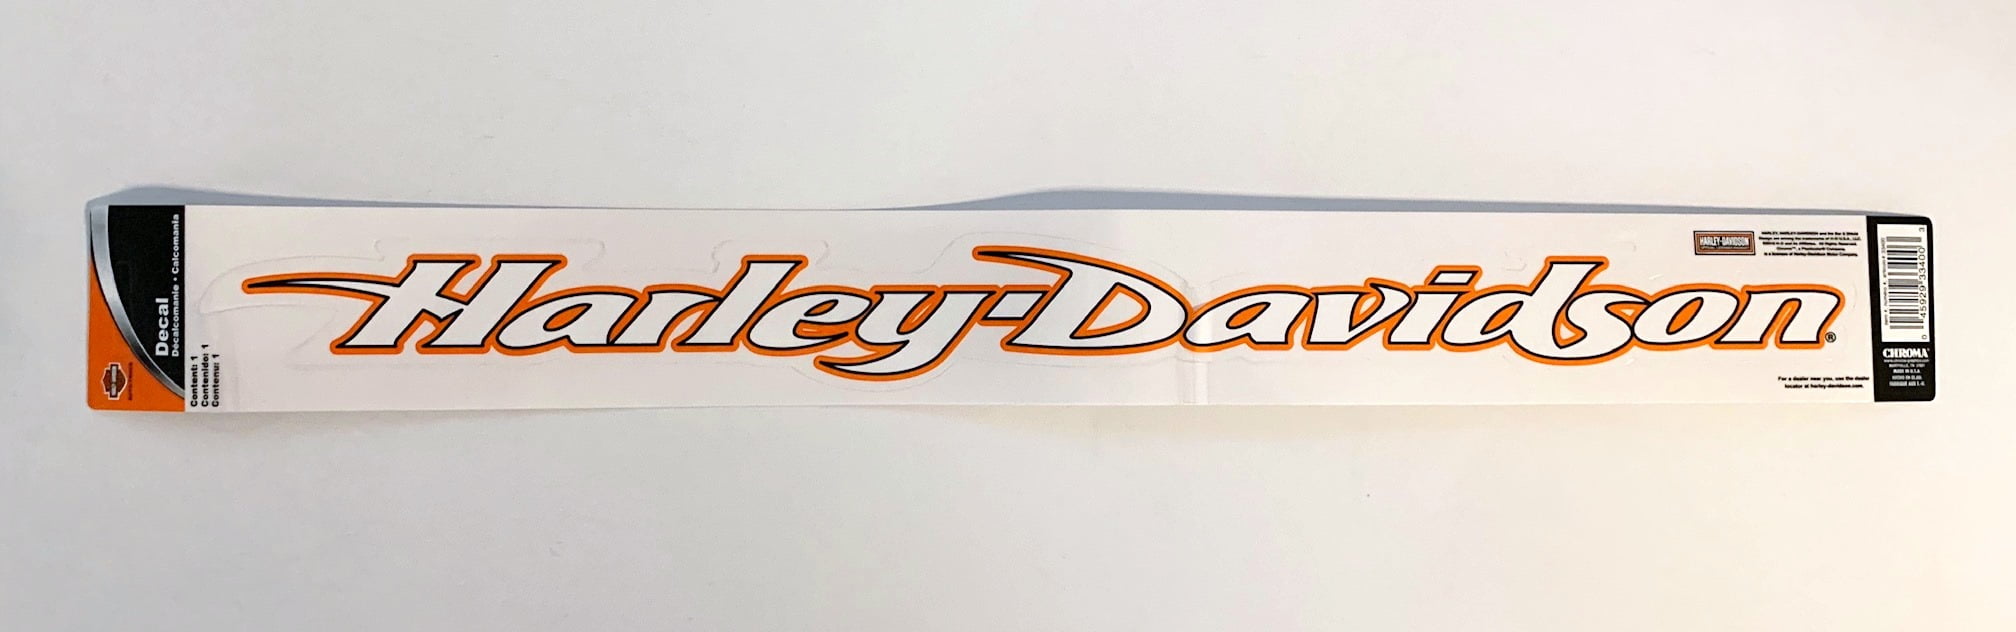 Harley Davidson Script Windshield Decal Walmart Com